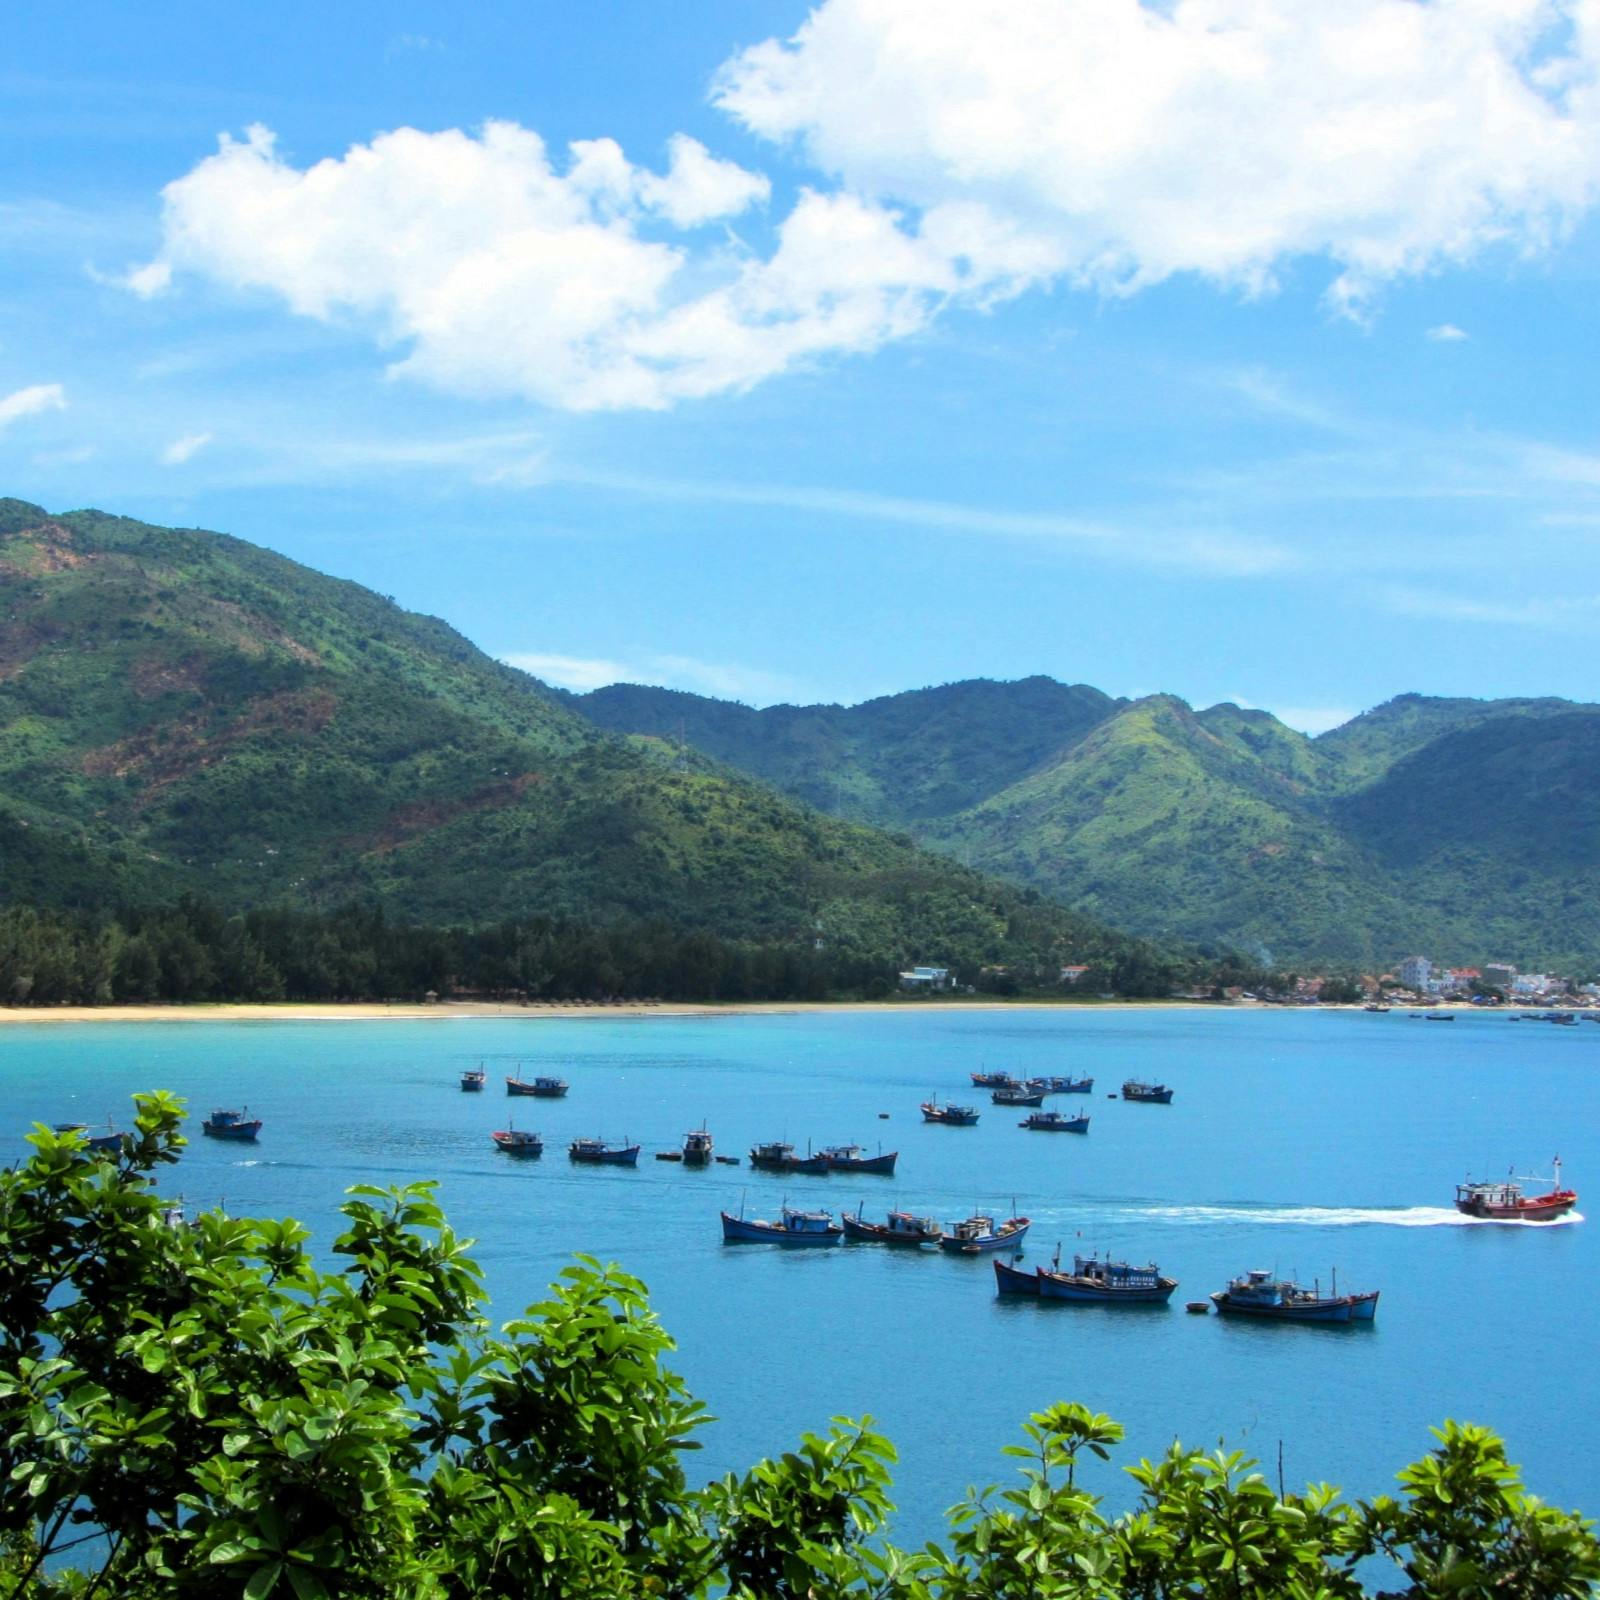 Dai Lanh Beach, Travel Guide, Vietnam